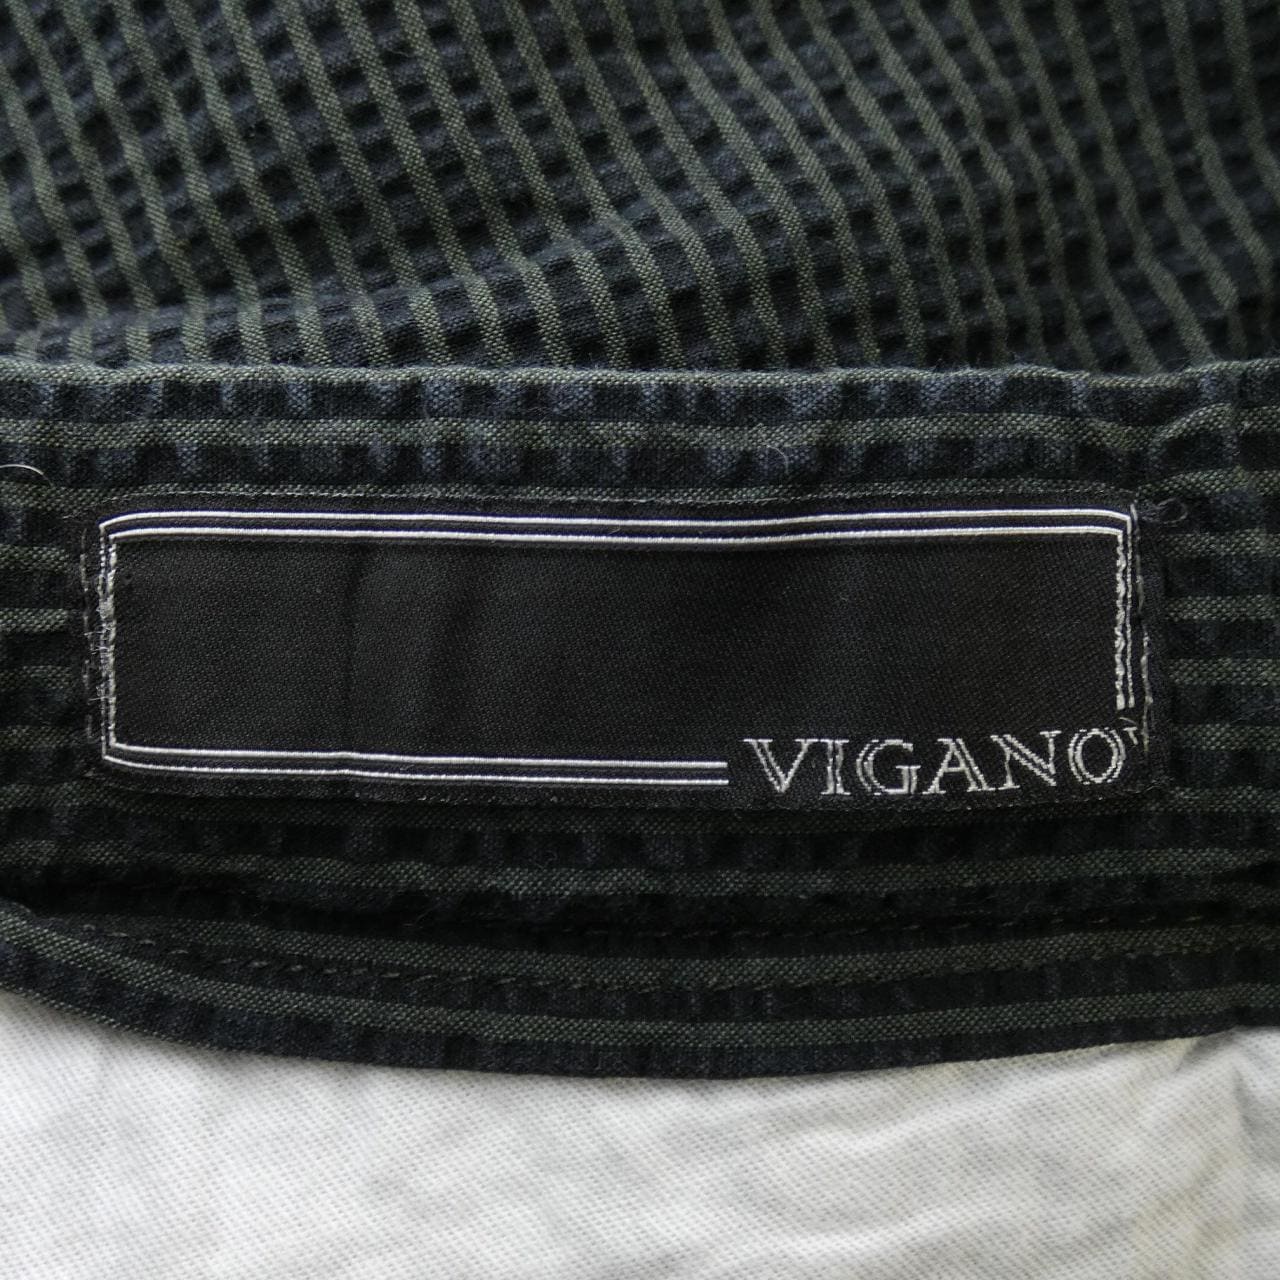 維加諾VIGANO褲